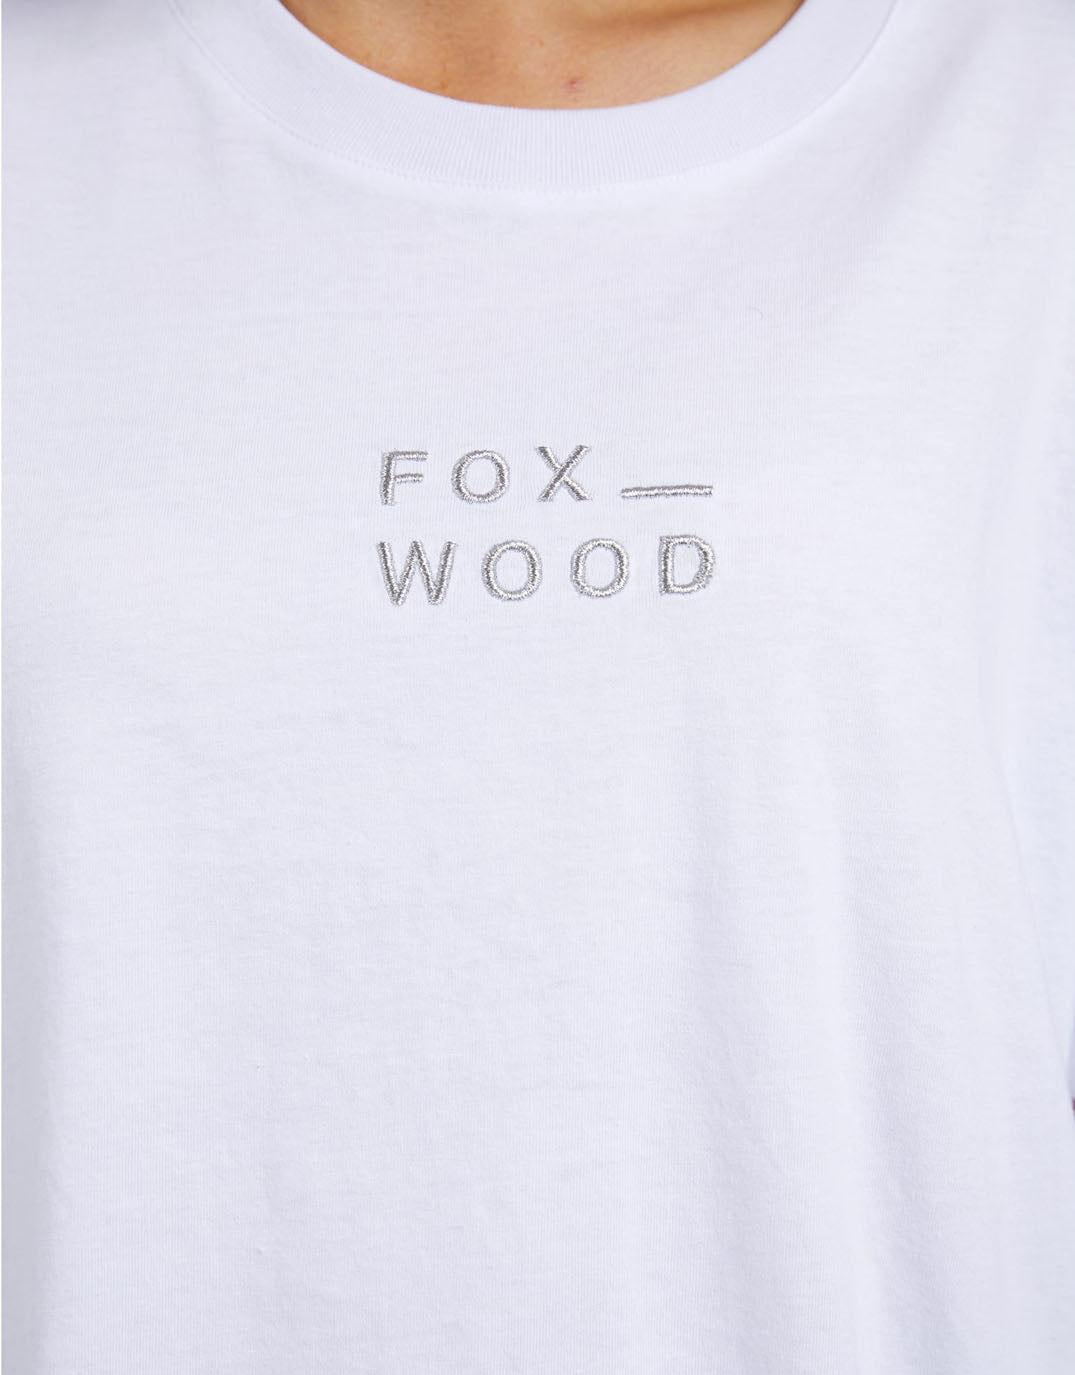 foxwood-huntleigh-oversized-tee-white-foxwood-clothing